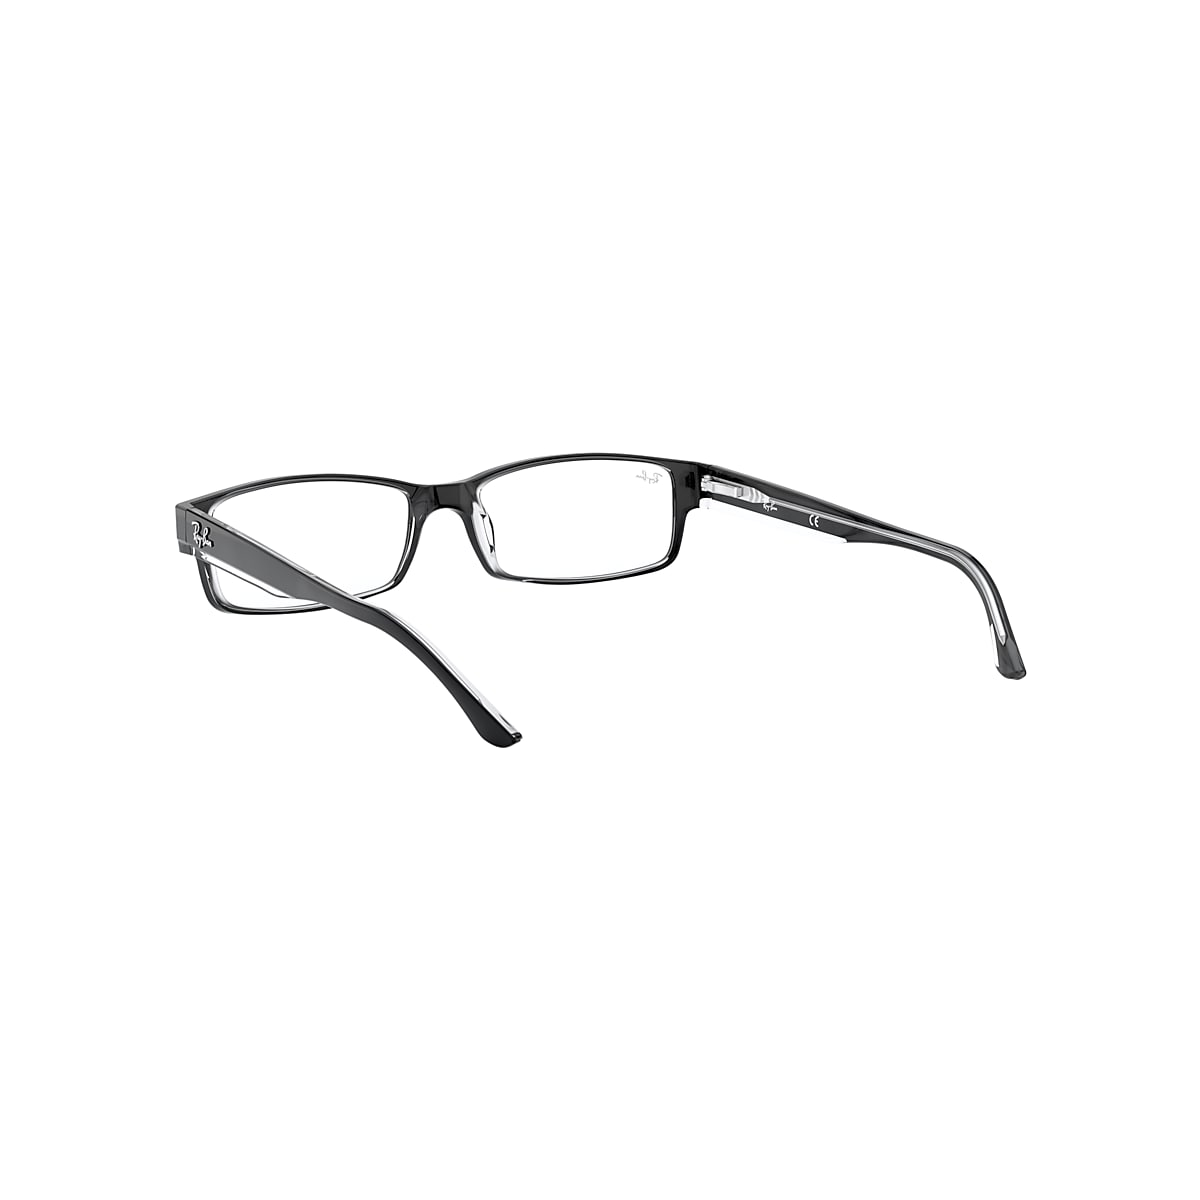 Christchurch Afleiden chrysant Rb5114 Optics Eyeglasses with Black On Transparent Frame | Ray-Ban®